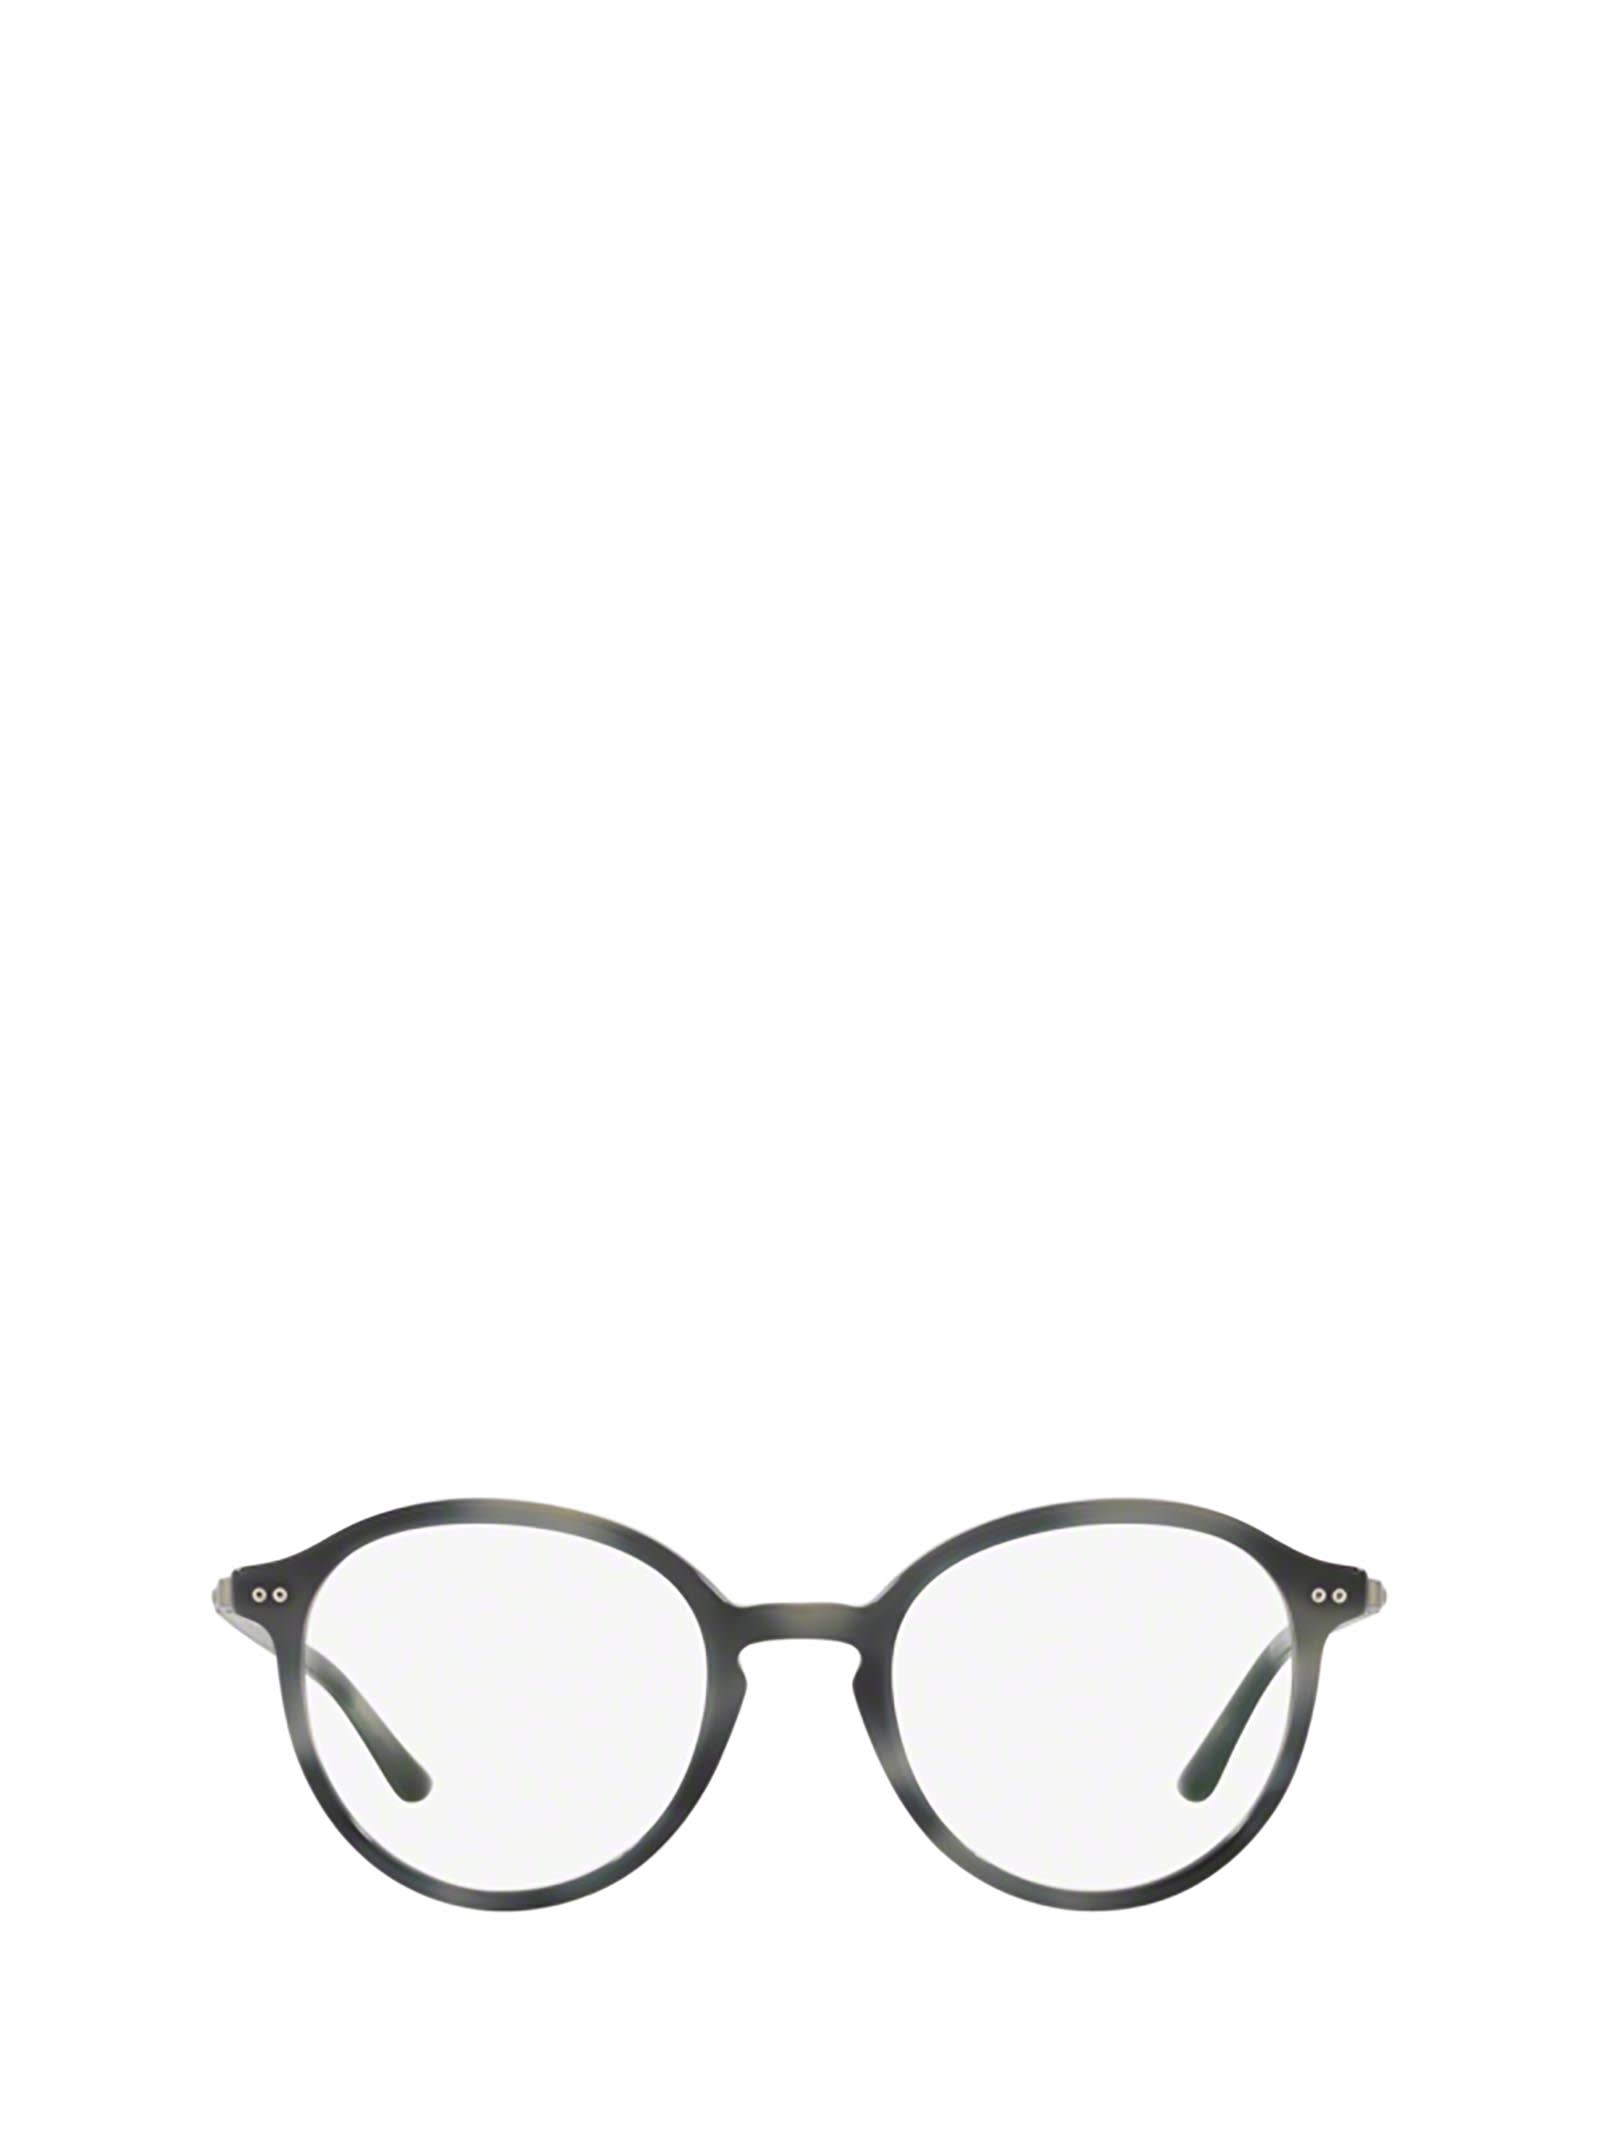 Giorgio Armani Ar7124 5572 Glasses